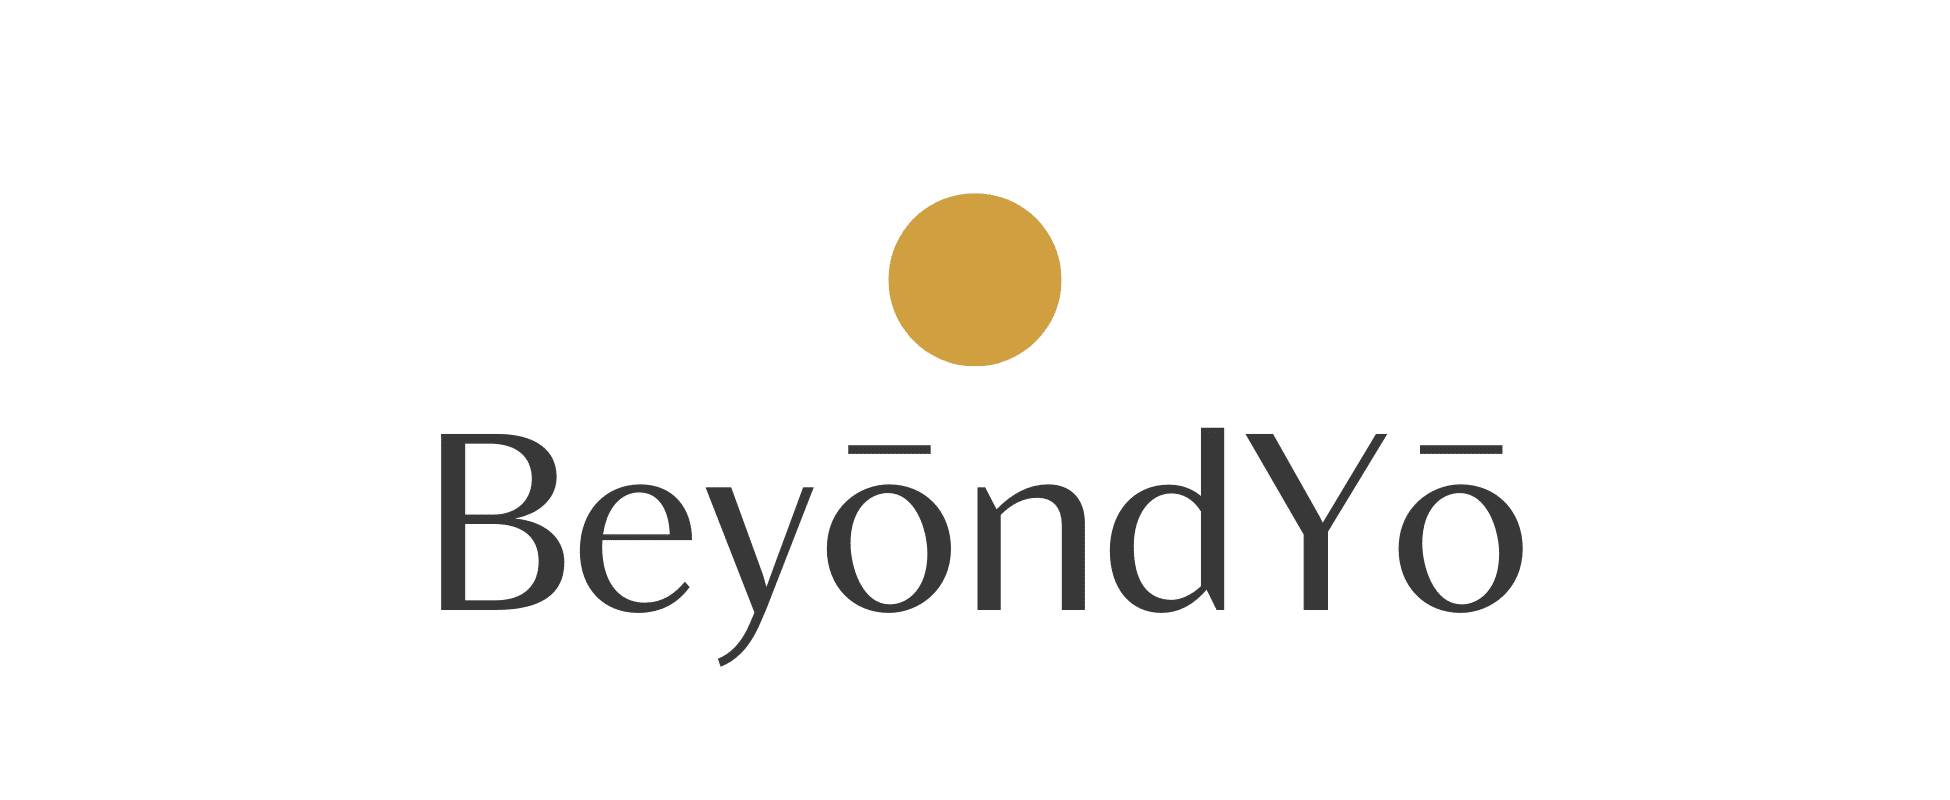 BeyōndYō - TLobgevity und Wellness Brand